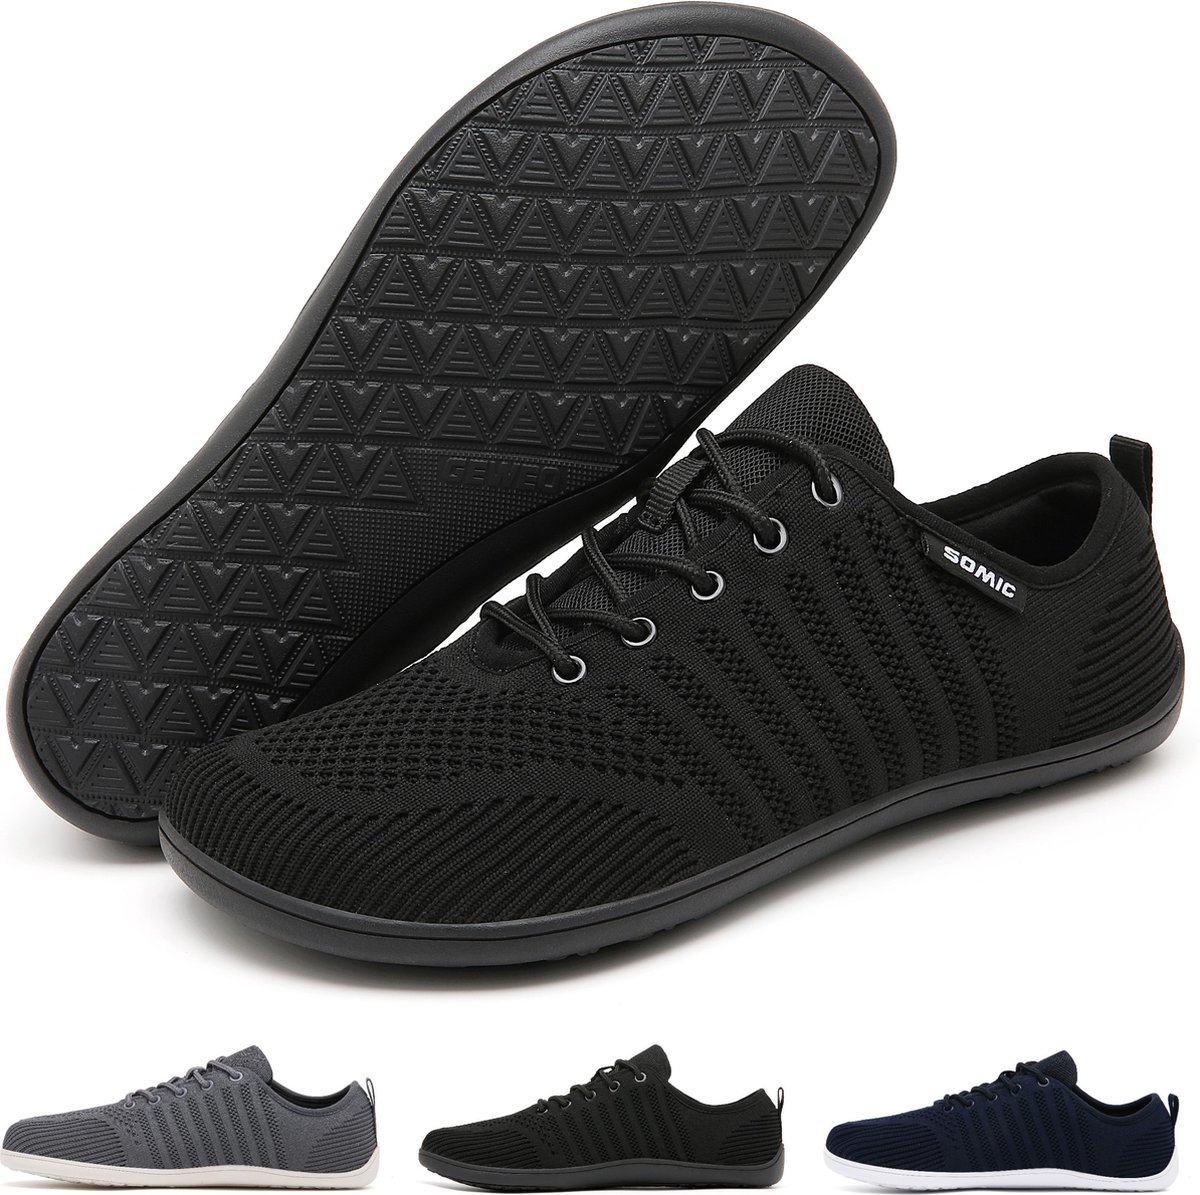 Somic Barefoot Schoenen - Sportschoenen Sneakers - Fitnessschoenen - Hardloopschoenen - Ademend Knit Textiel - Platte Zool - Zwart - Maat 41